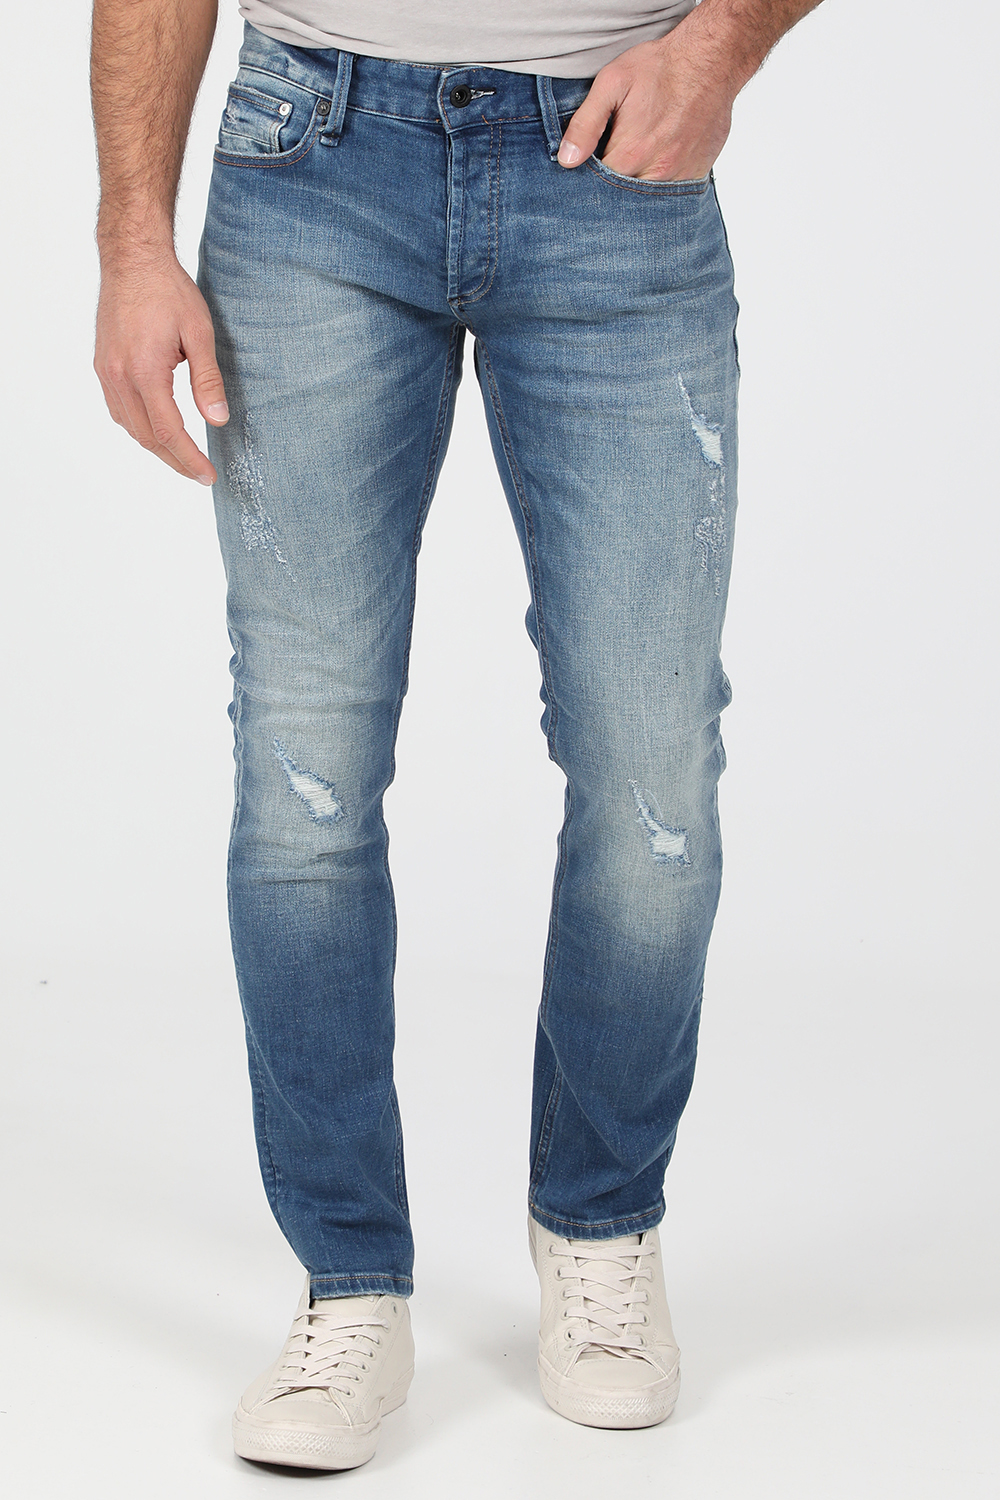 DENHAM – Ανδρικό jean παντελόνι DENHAM RAZOR WLBALTI μπλε 1823100.0-0101